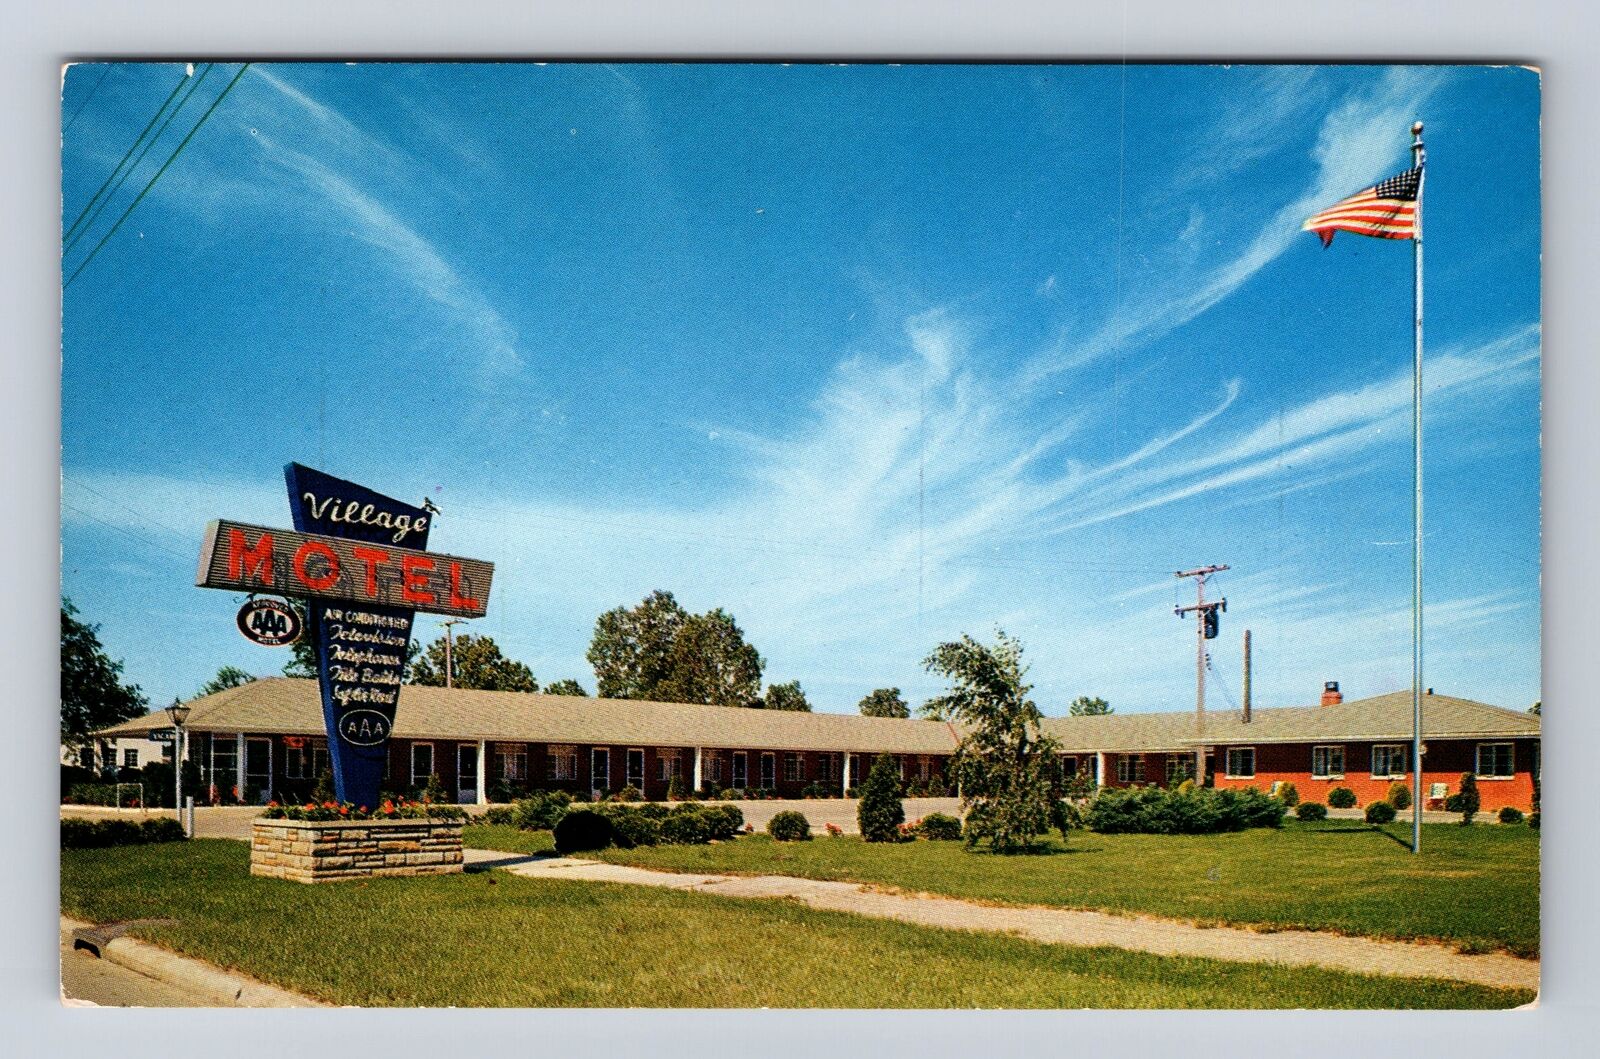 Cleveland OH- Ohio, The Village Motel, Advertisement, Antique, Vintage Postcard